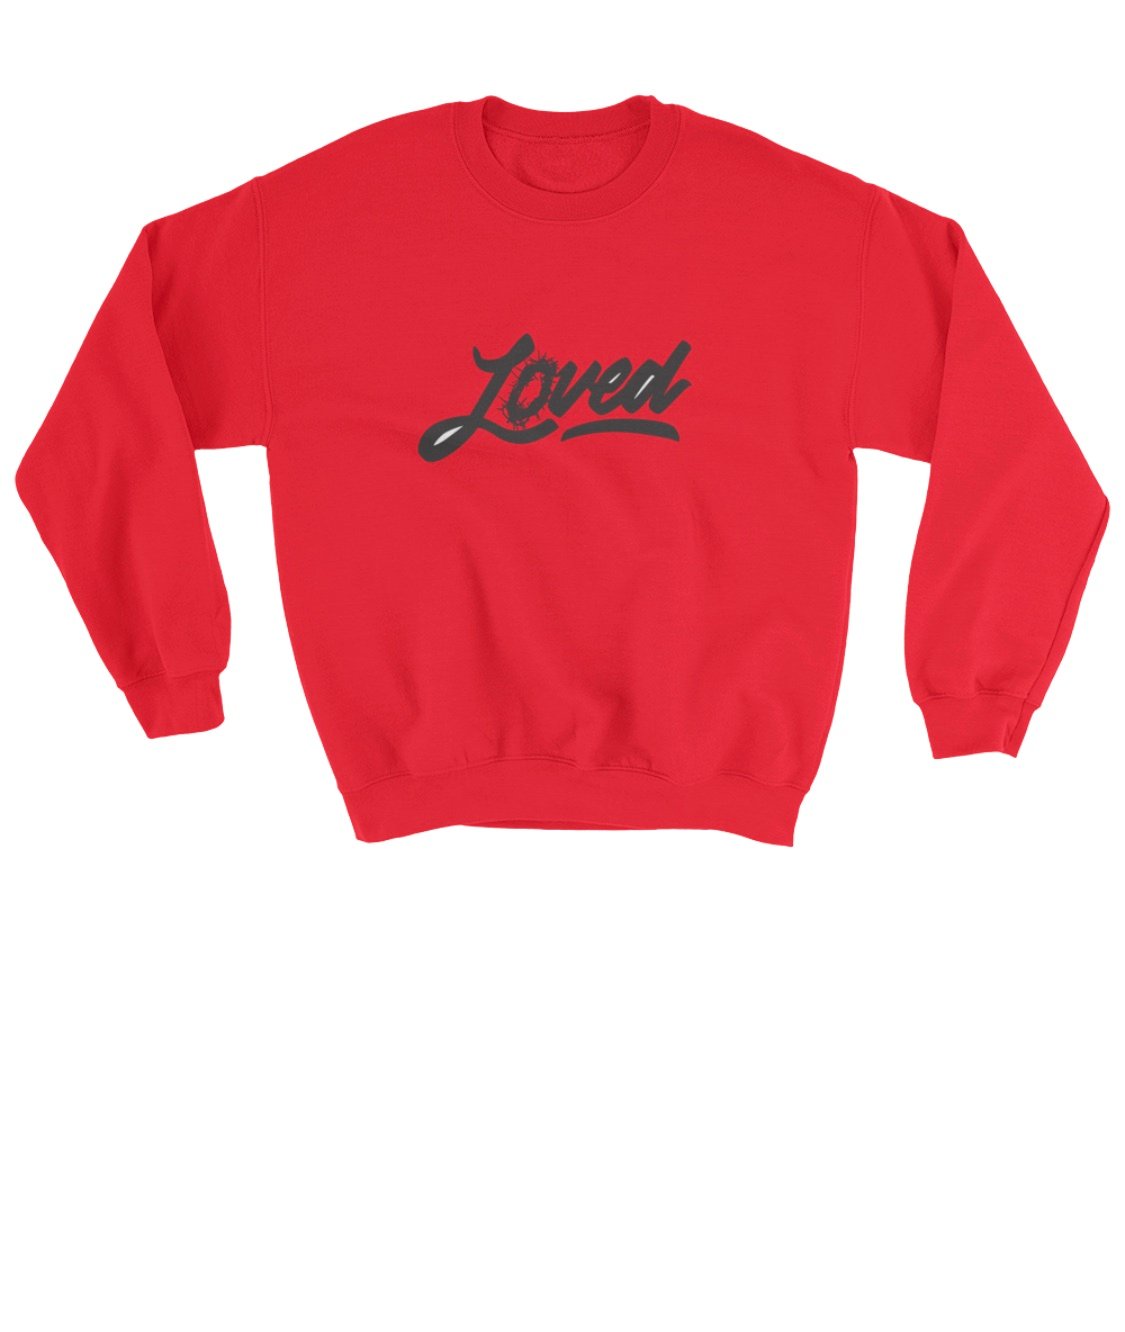 Image of Loved sweatshirt 